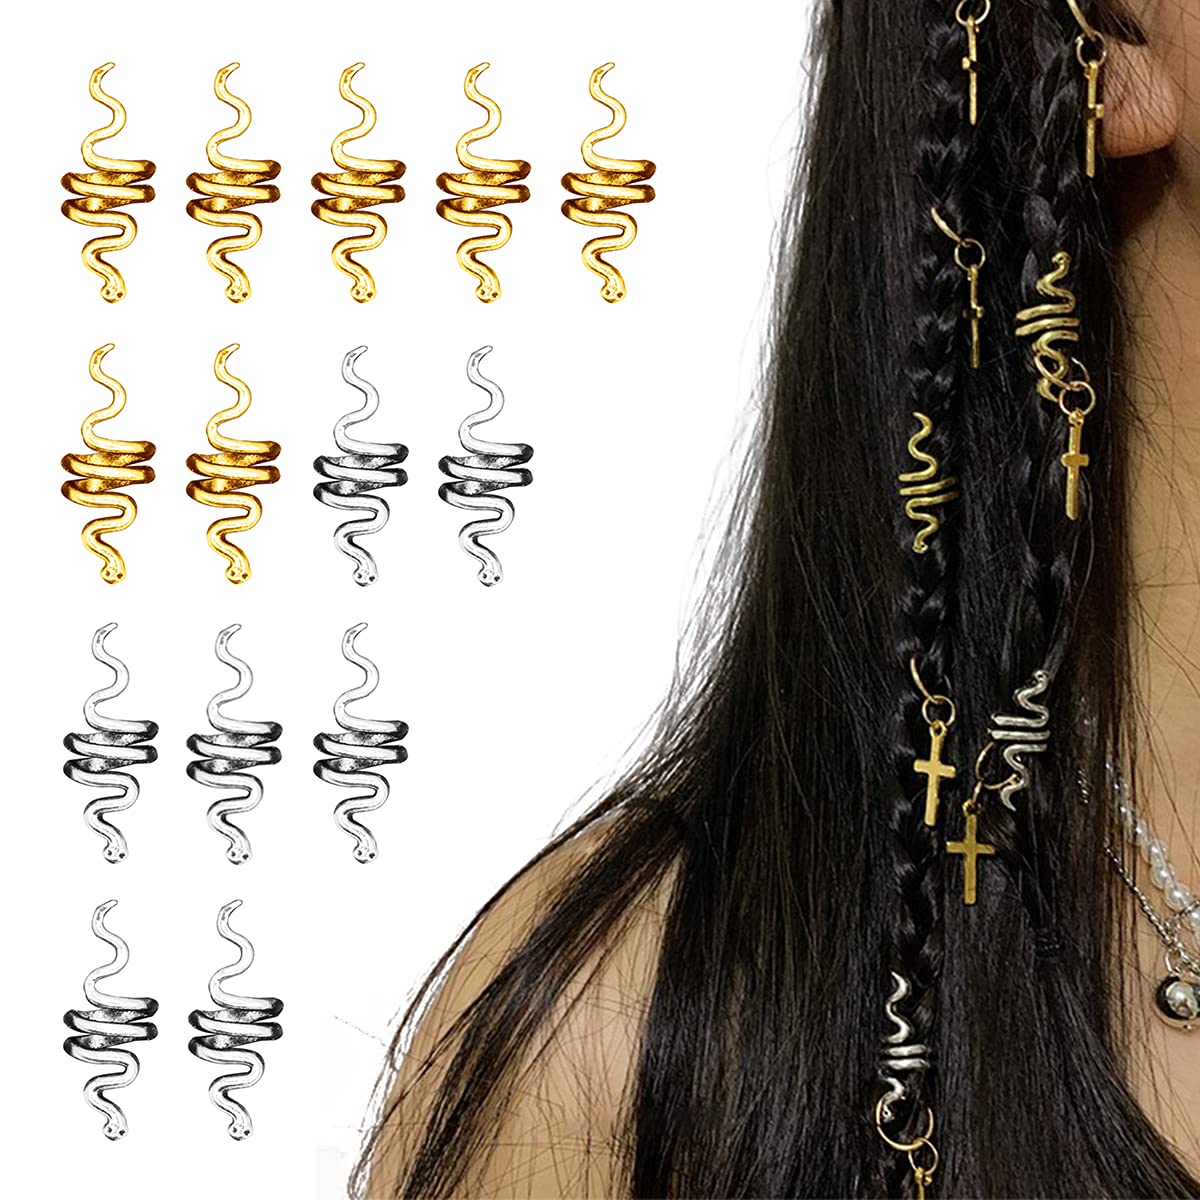 Hair Accessories Dreadlocks Jewellery, Metal Hair Beads Clips Braids Spiral  Hair Clips Dreadlock Accessories for Women Girls DIY Hair Style 